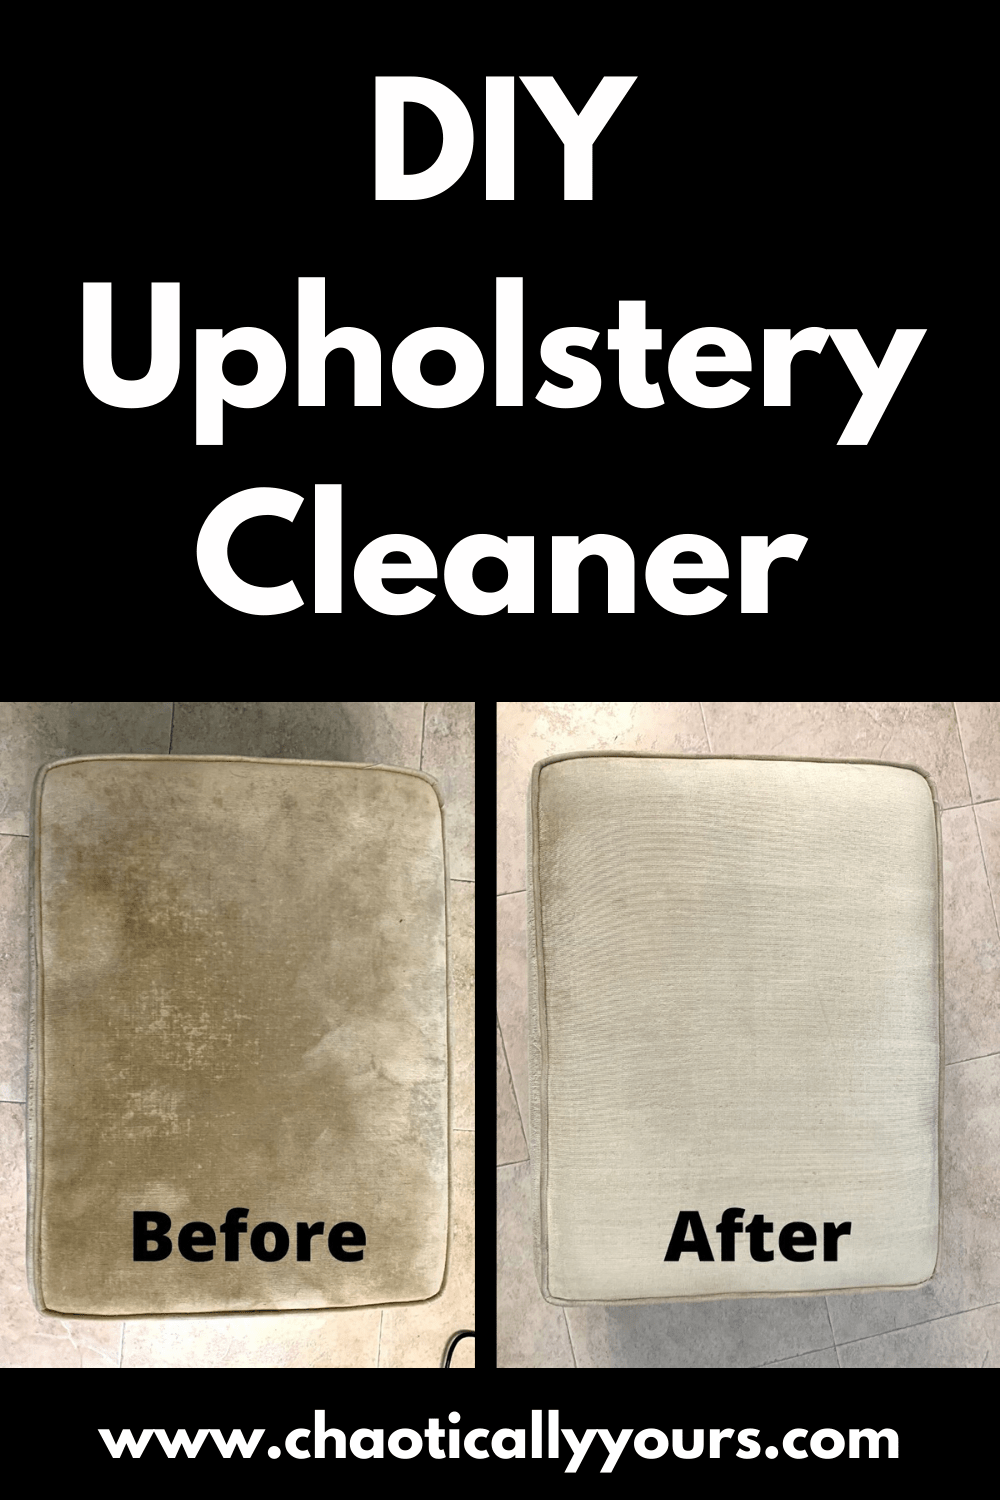 DIY Upholstery Cleaner